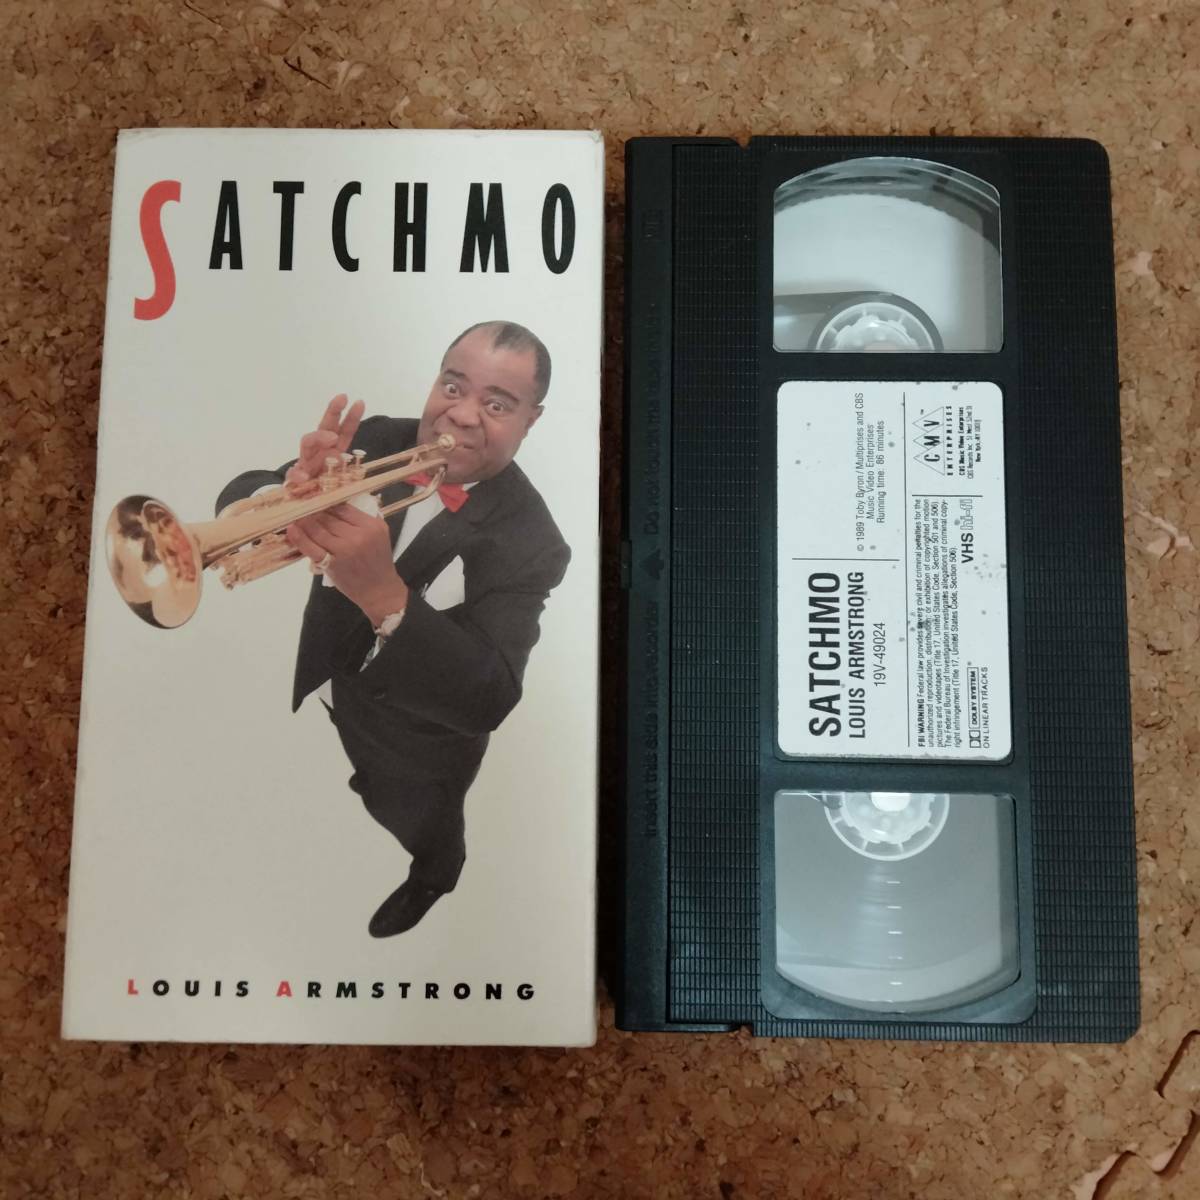  mountain ]VHS videotape Louis * Armstrong SATCHMO LOUIS ARMSTRONG